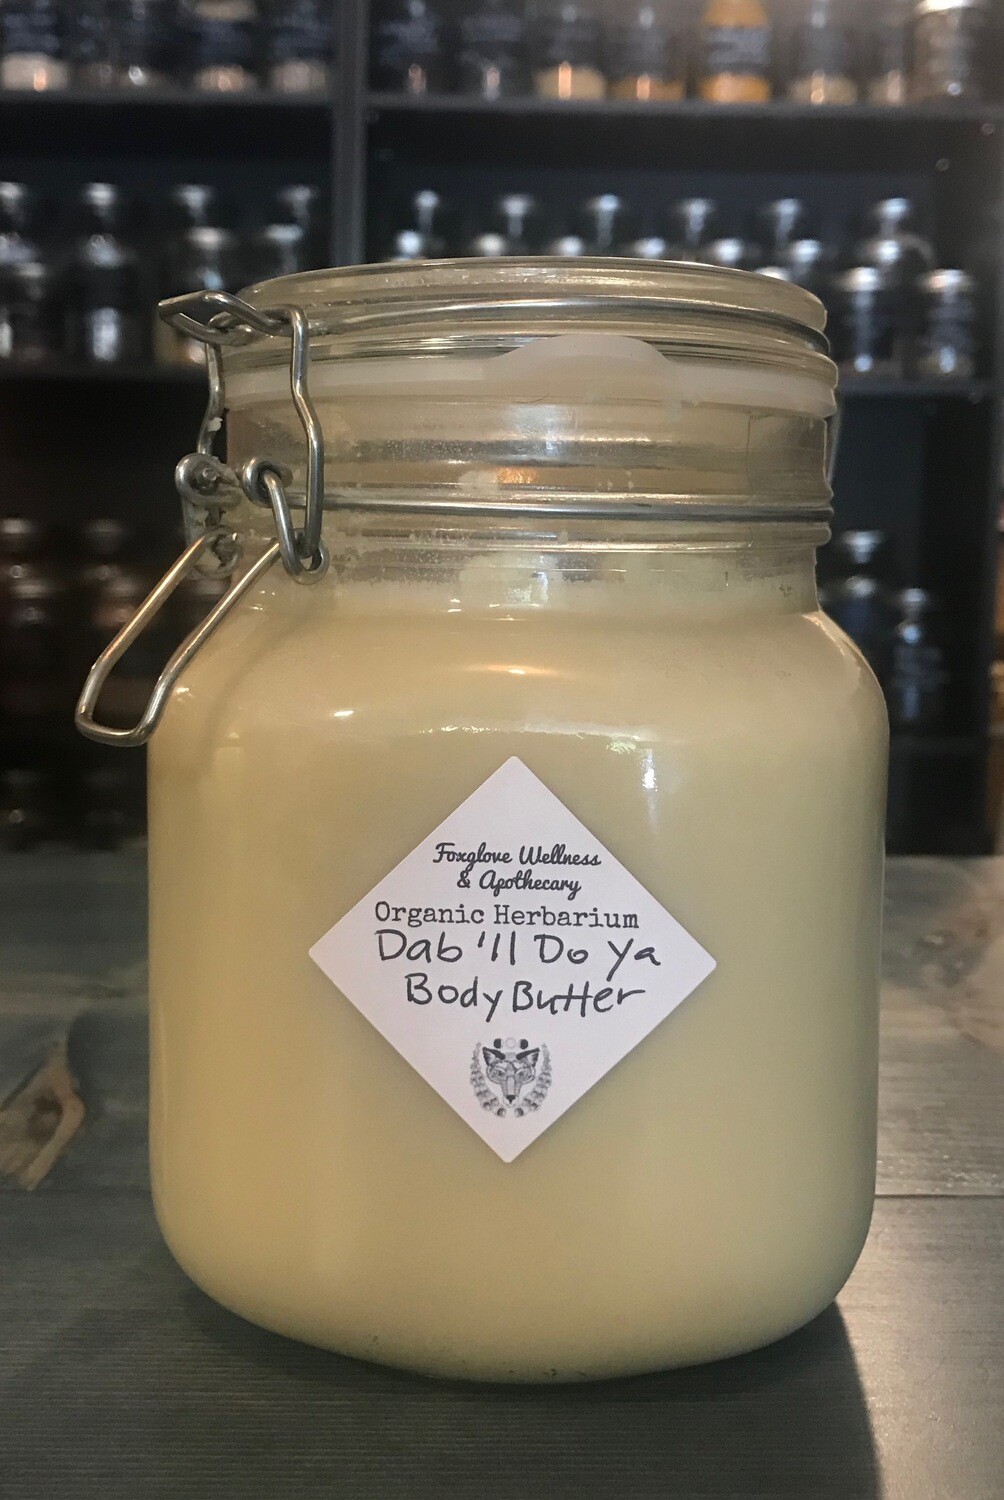 Dabb 'l Dooya - Body Butter by Shalon 5oz jar